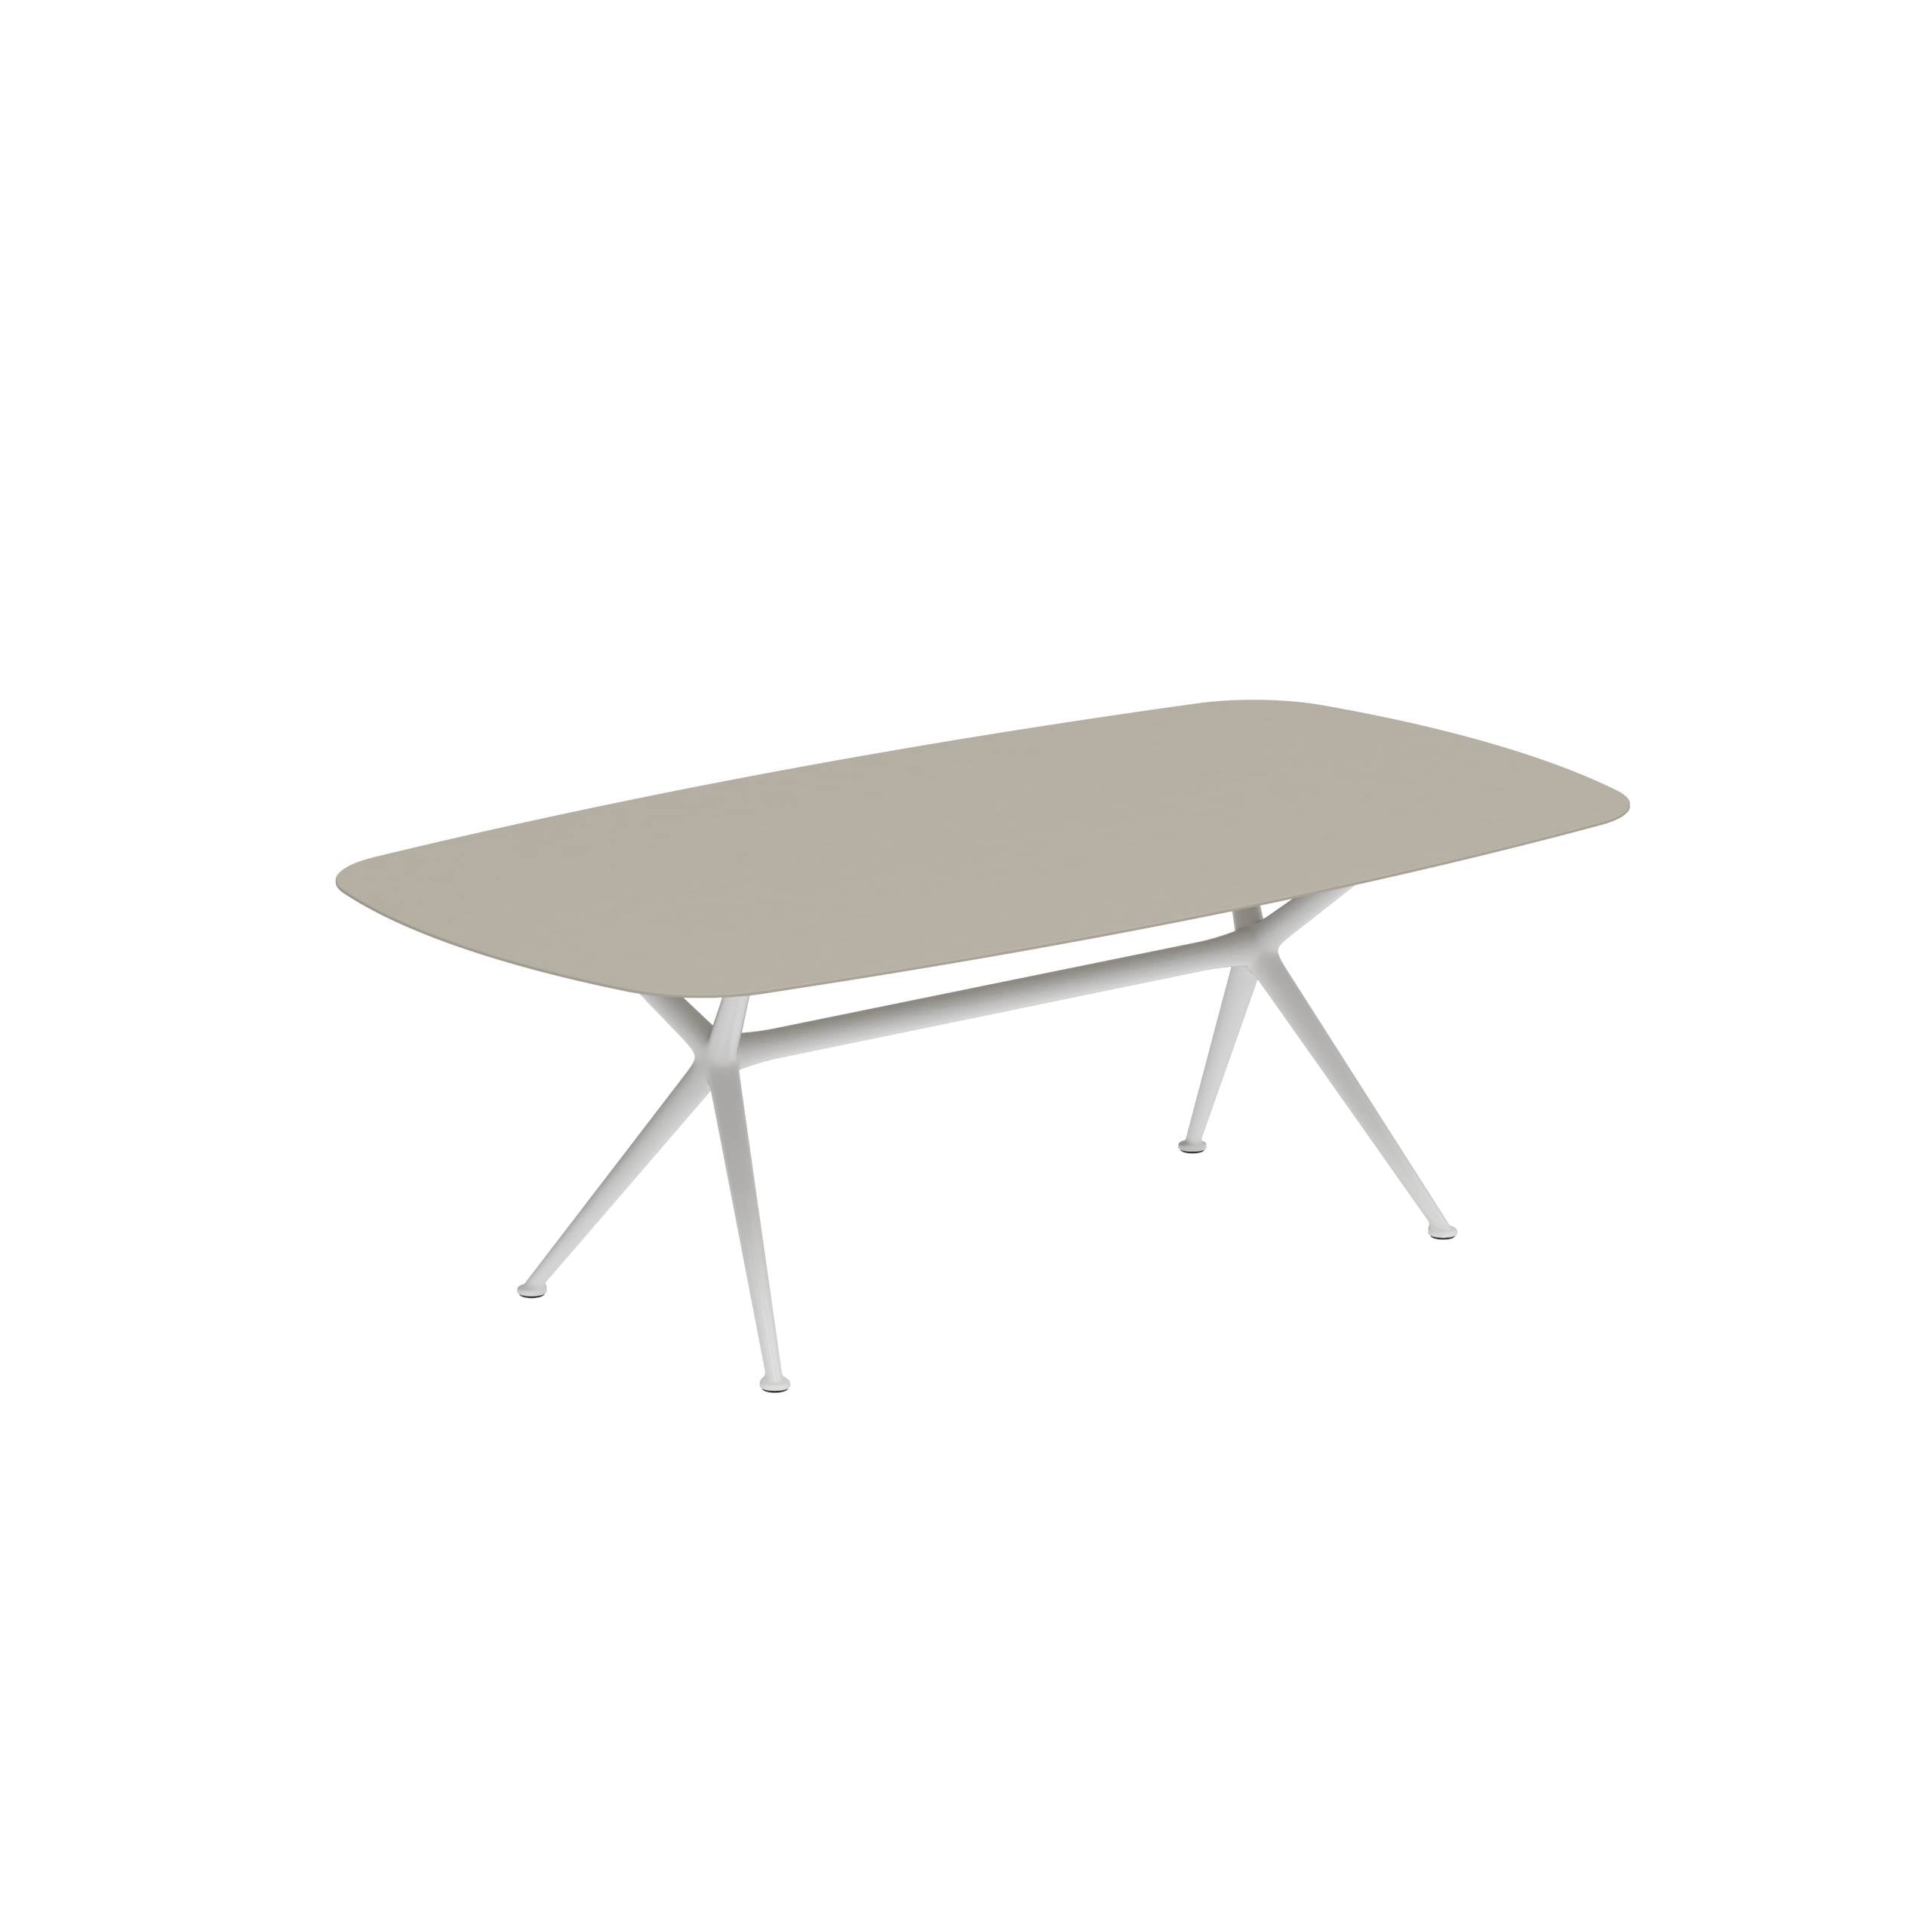 Exes Table 220x120cm Alu Legs White - Table Top Ceramic Pearl Grey